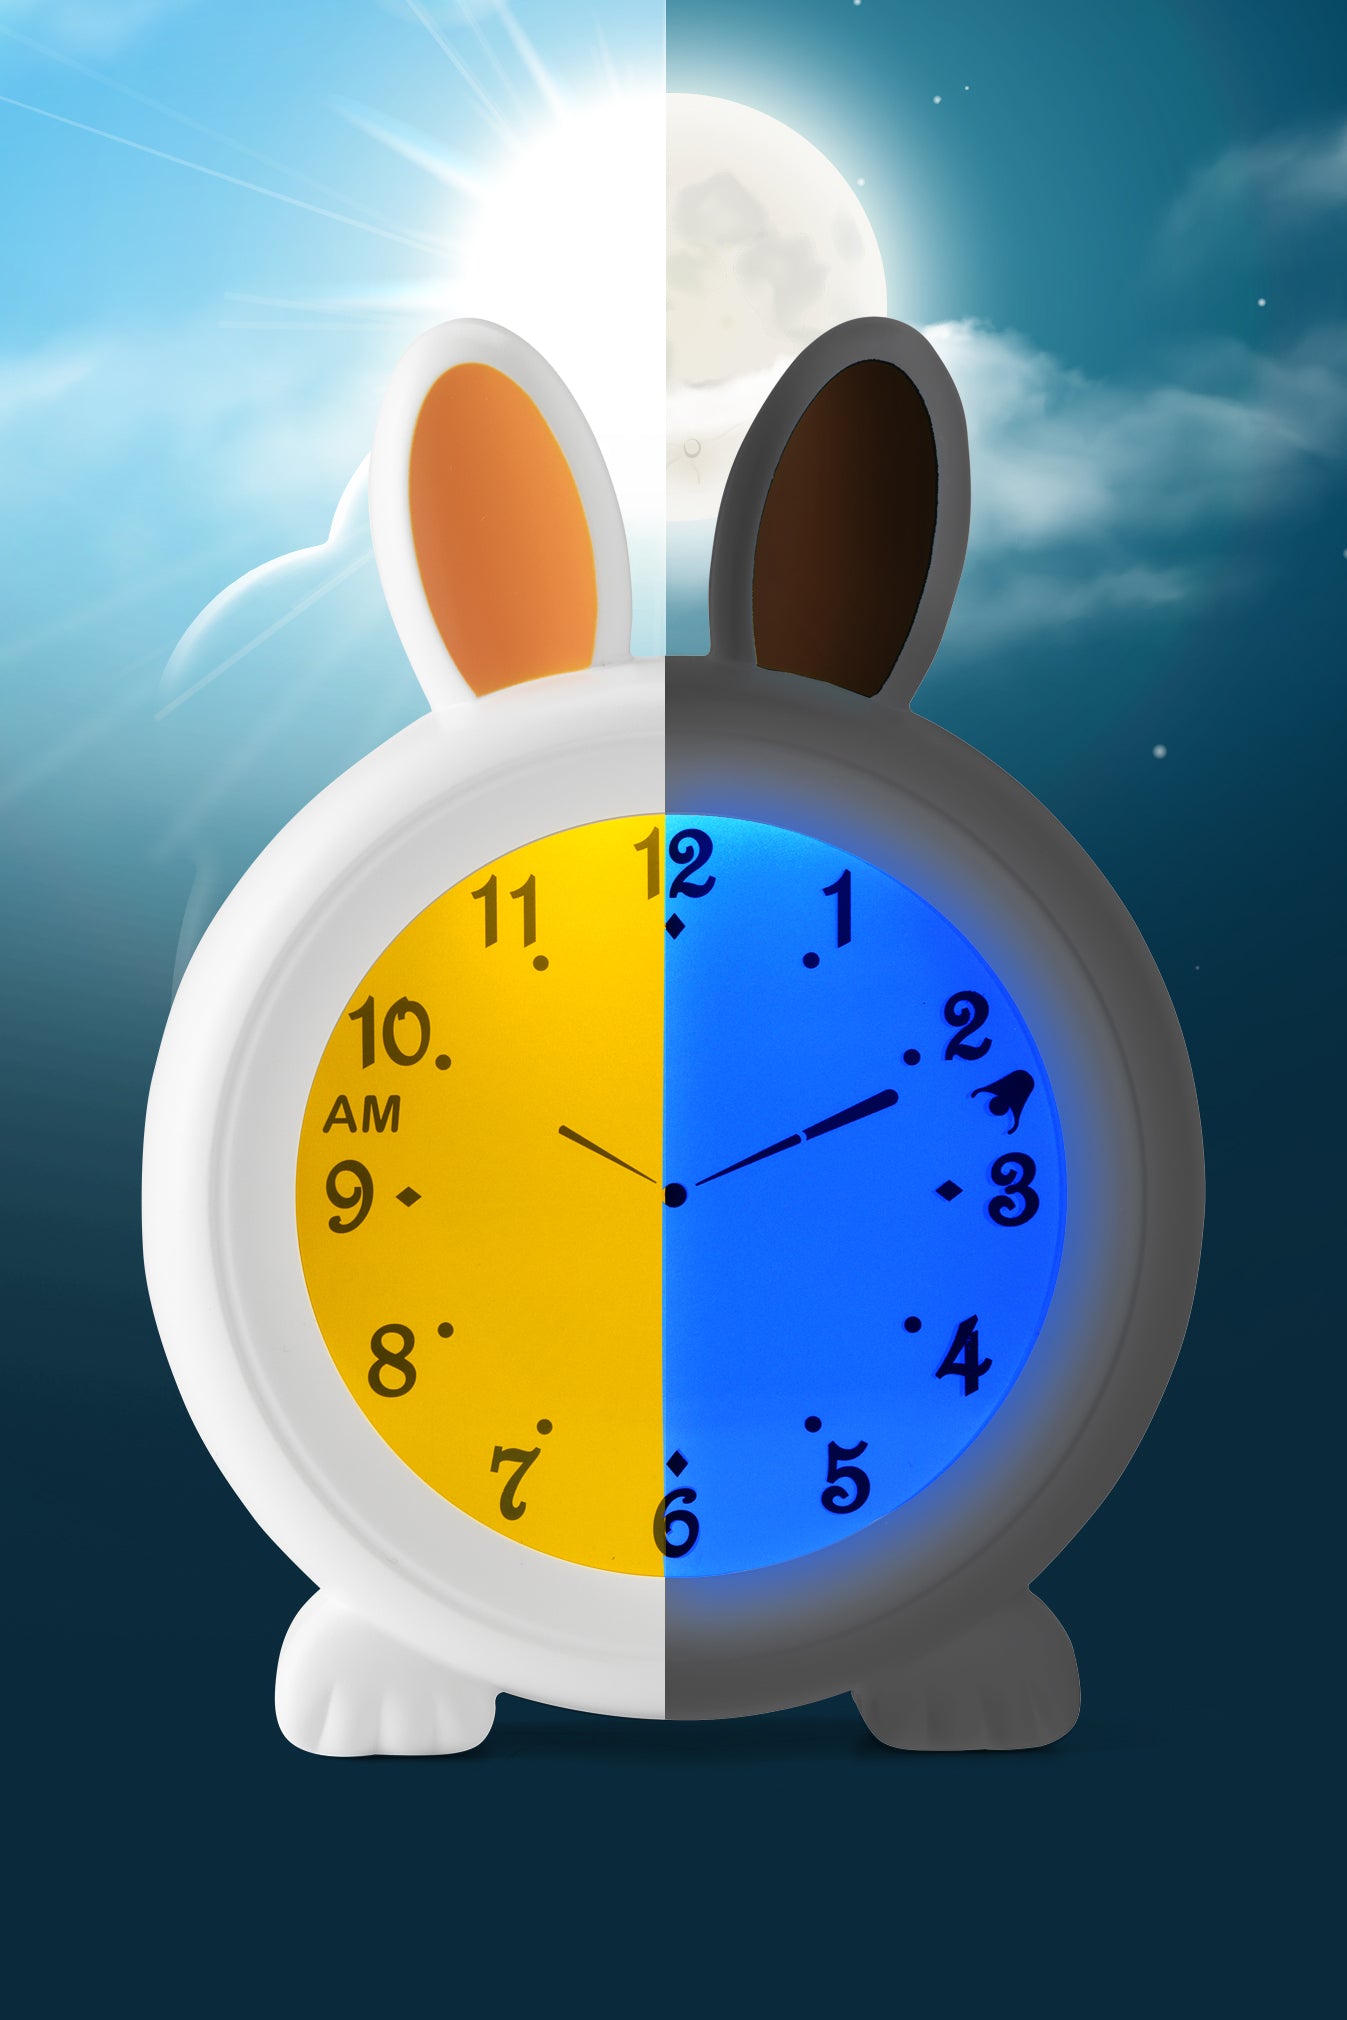 Alecto BC100BUNNY - Sleep trainer, night light and alarm clock, bunny